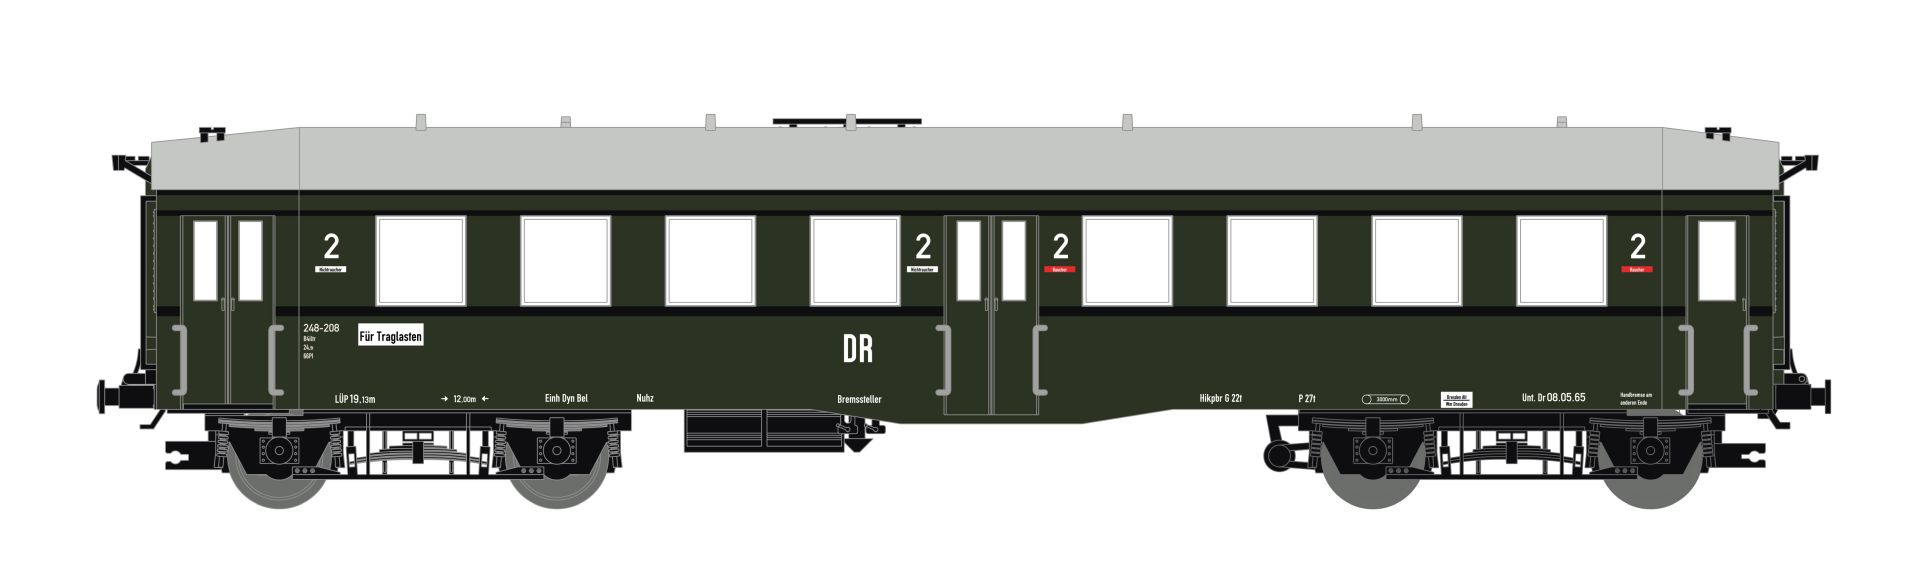 Saxonia 120005-2 - Personenwagen Bauart 'Altenberg', 2. Klasse, DR, Ep.III